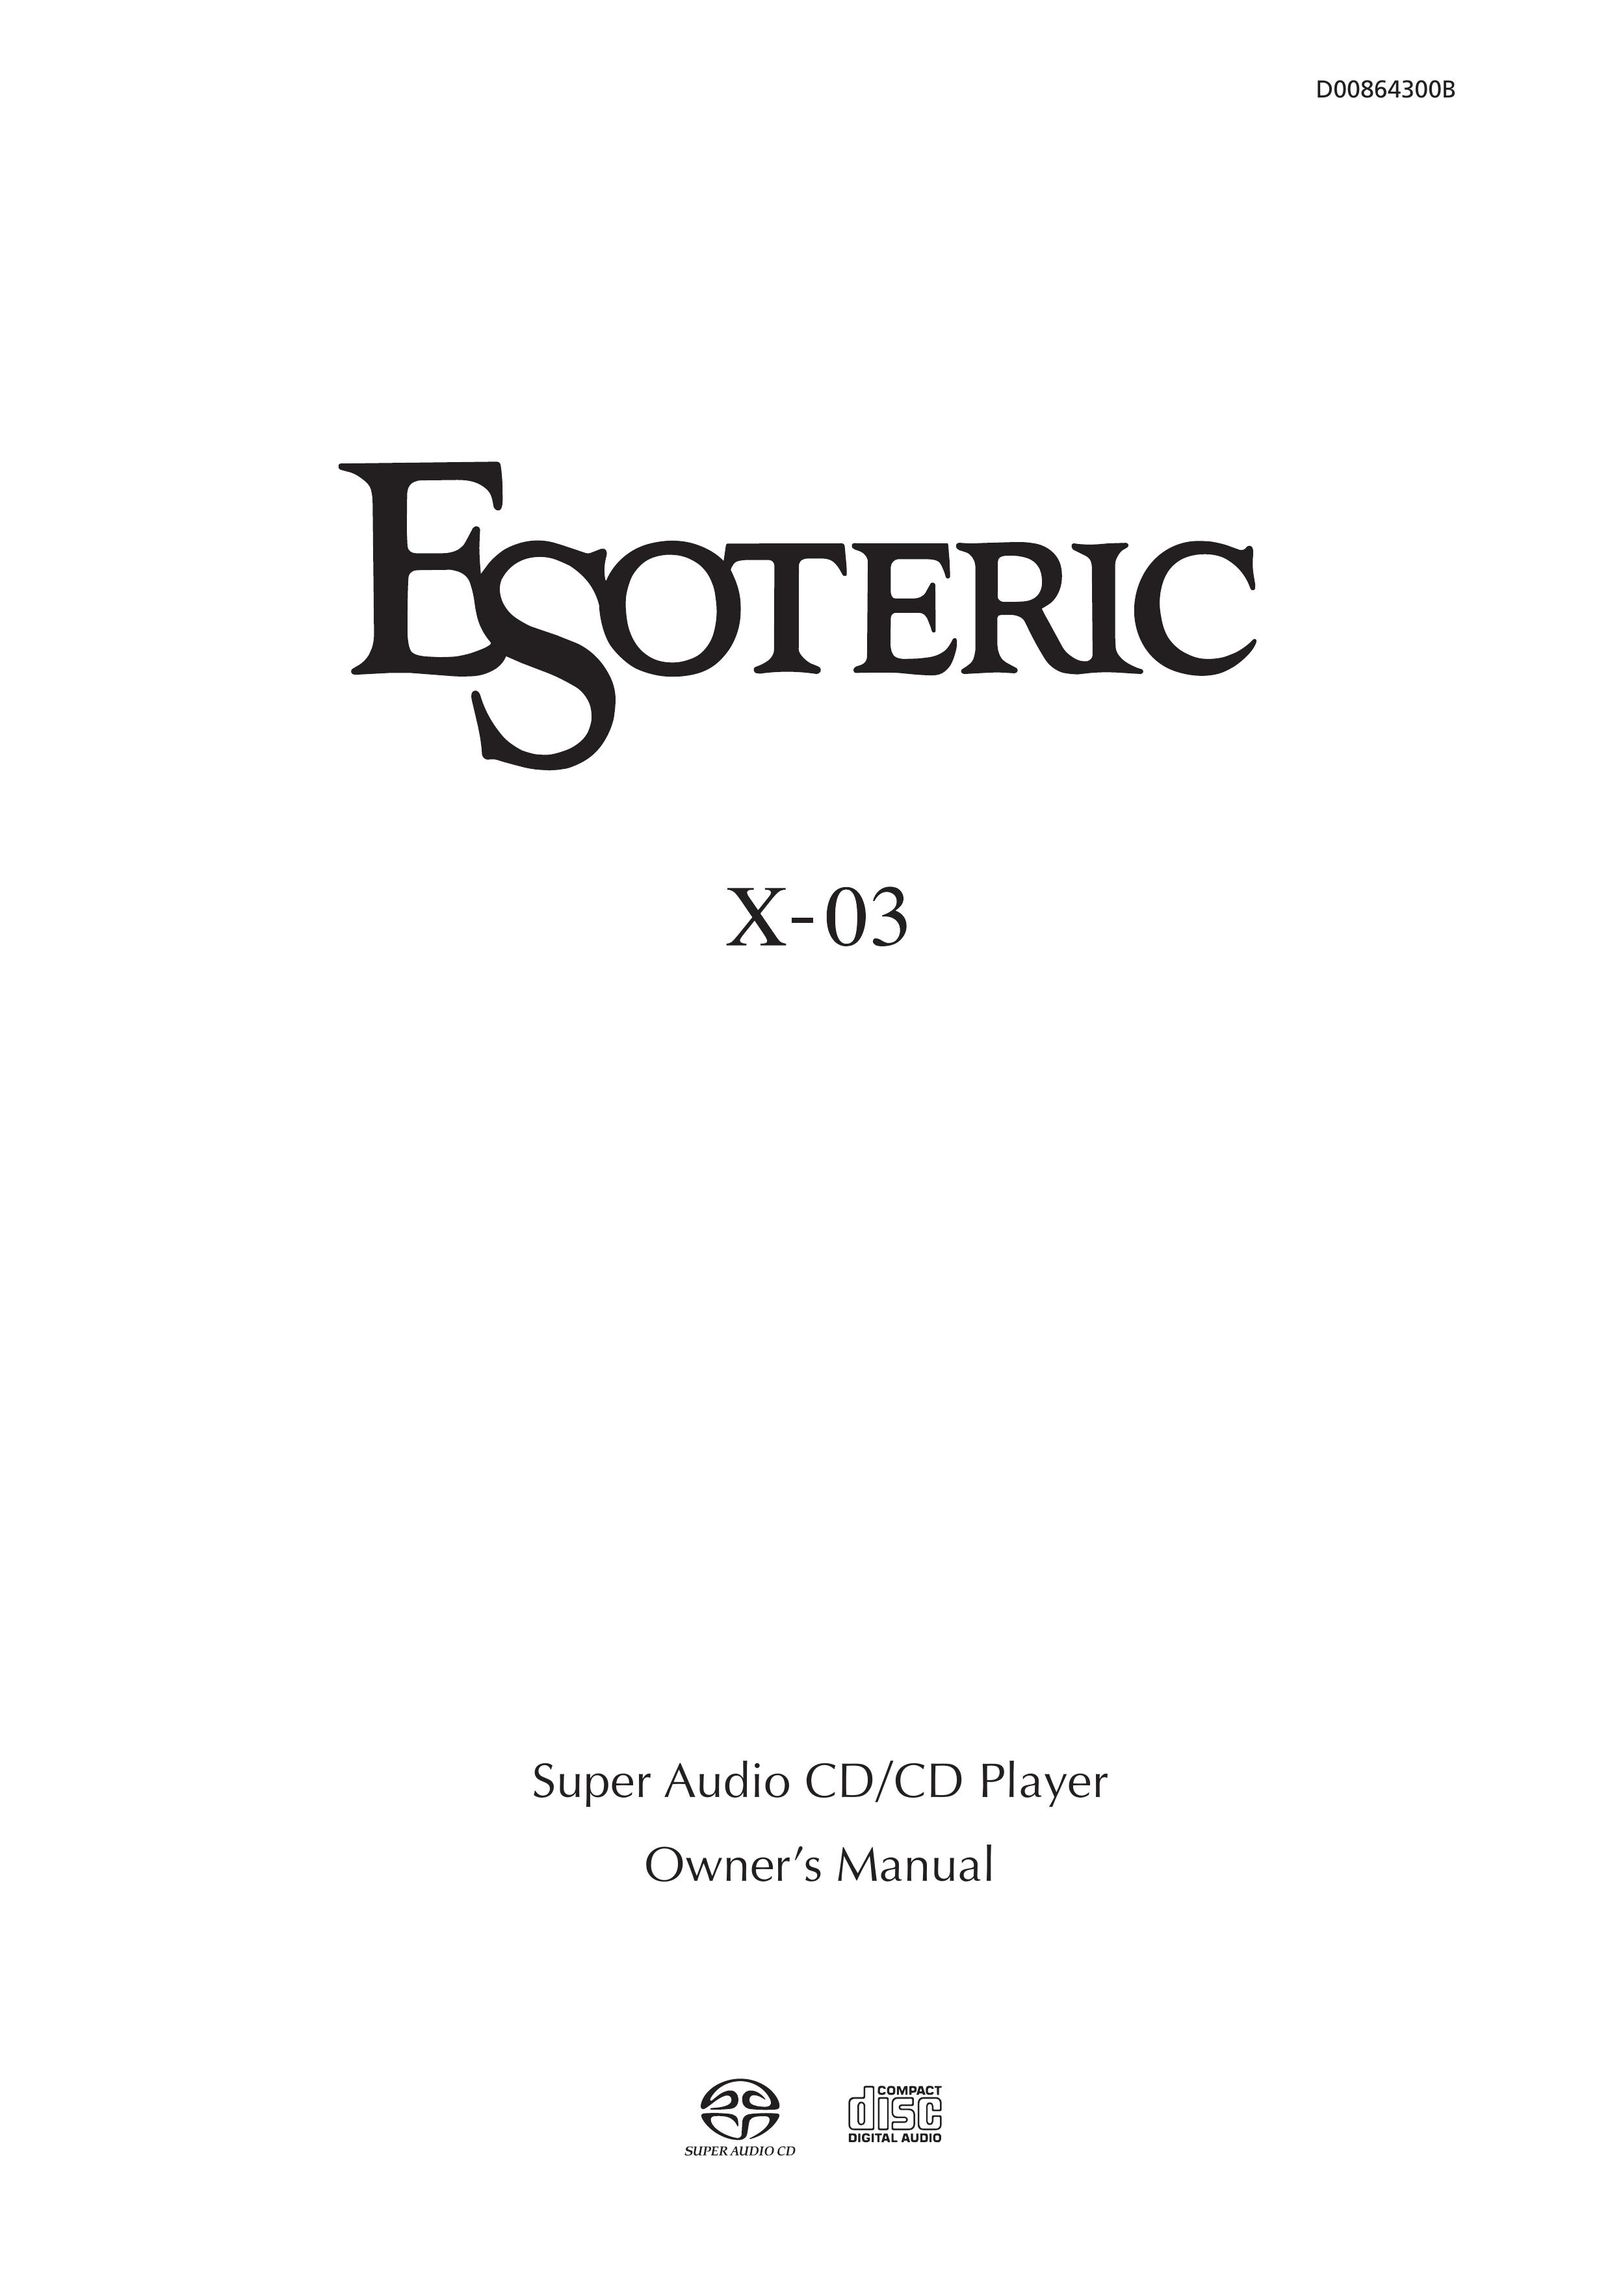 Esoteric X-03 CD Player User Manual